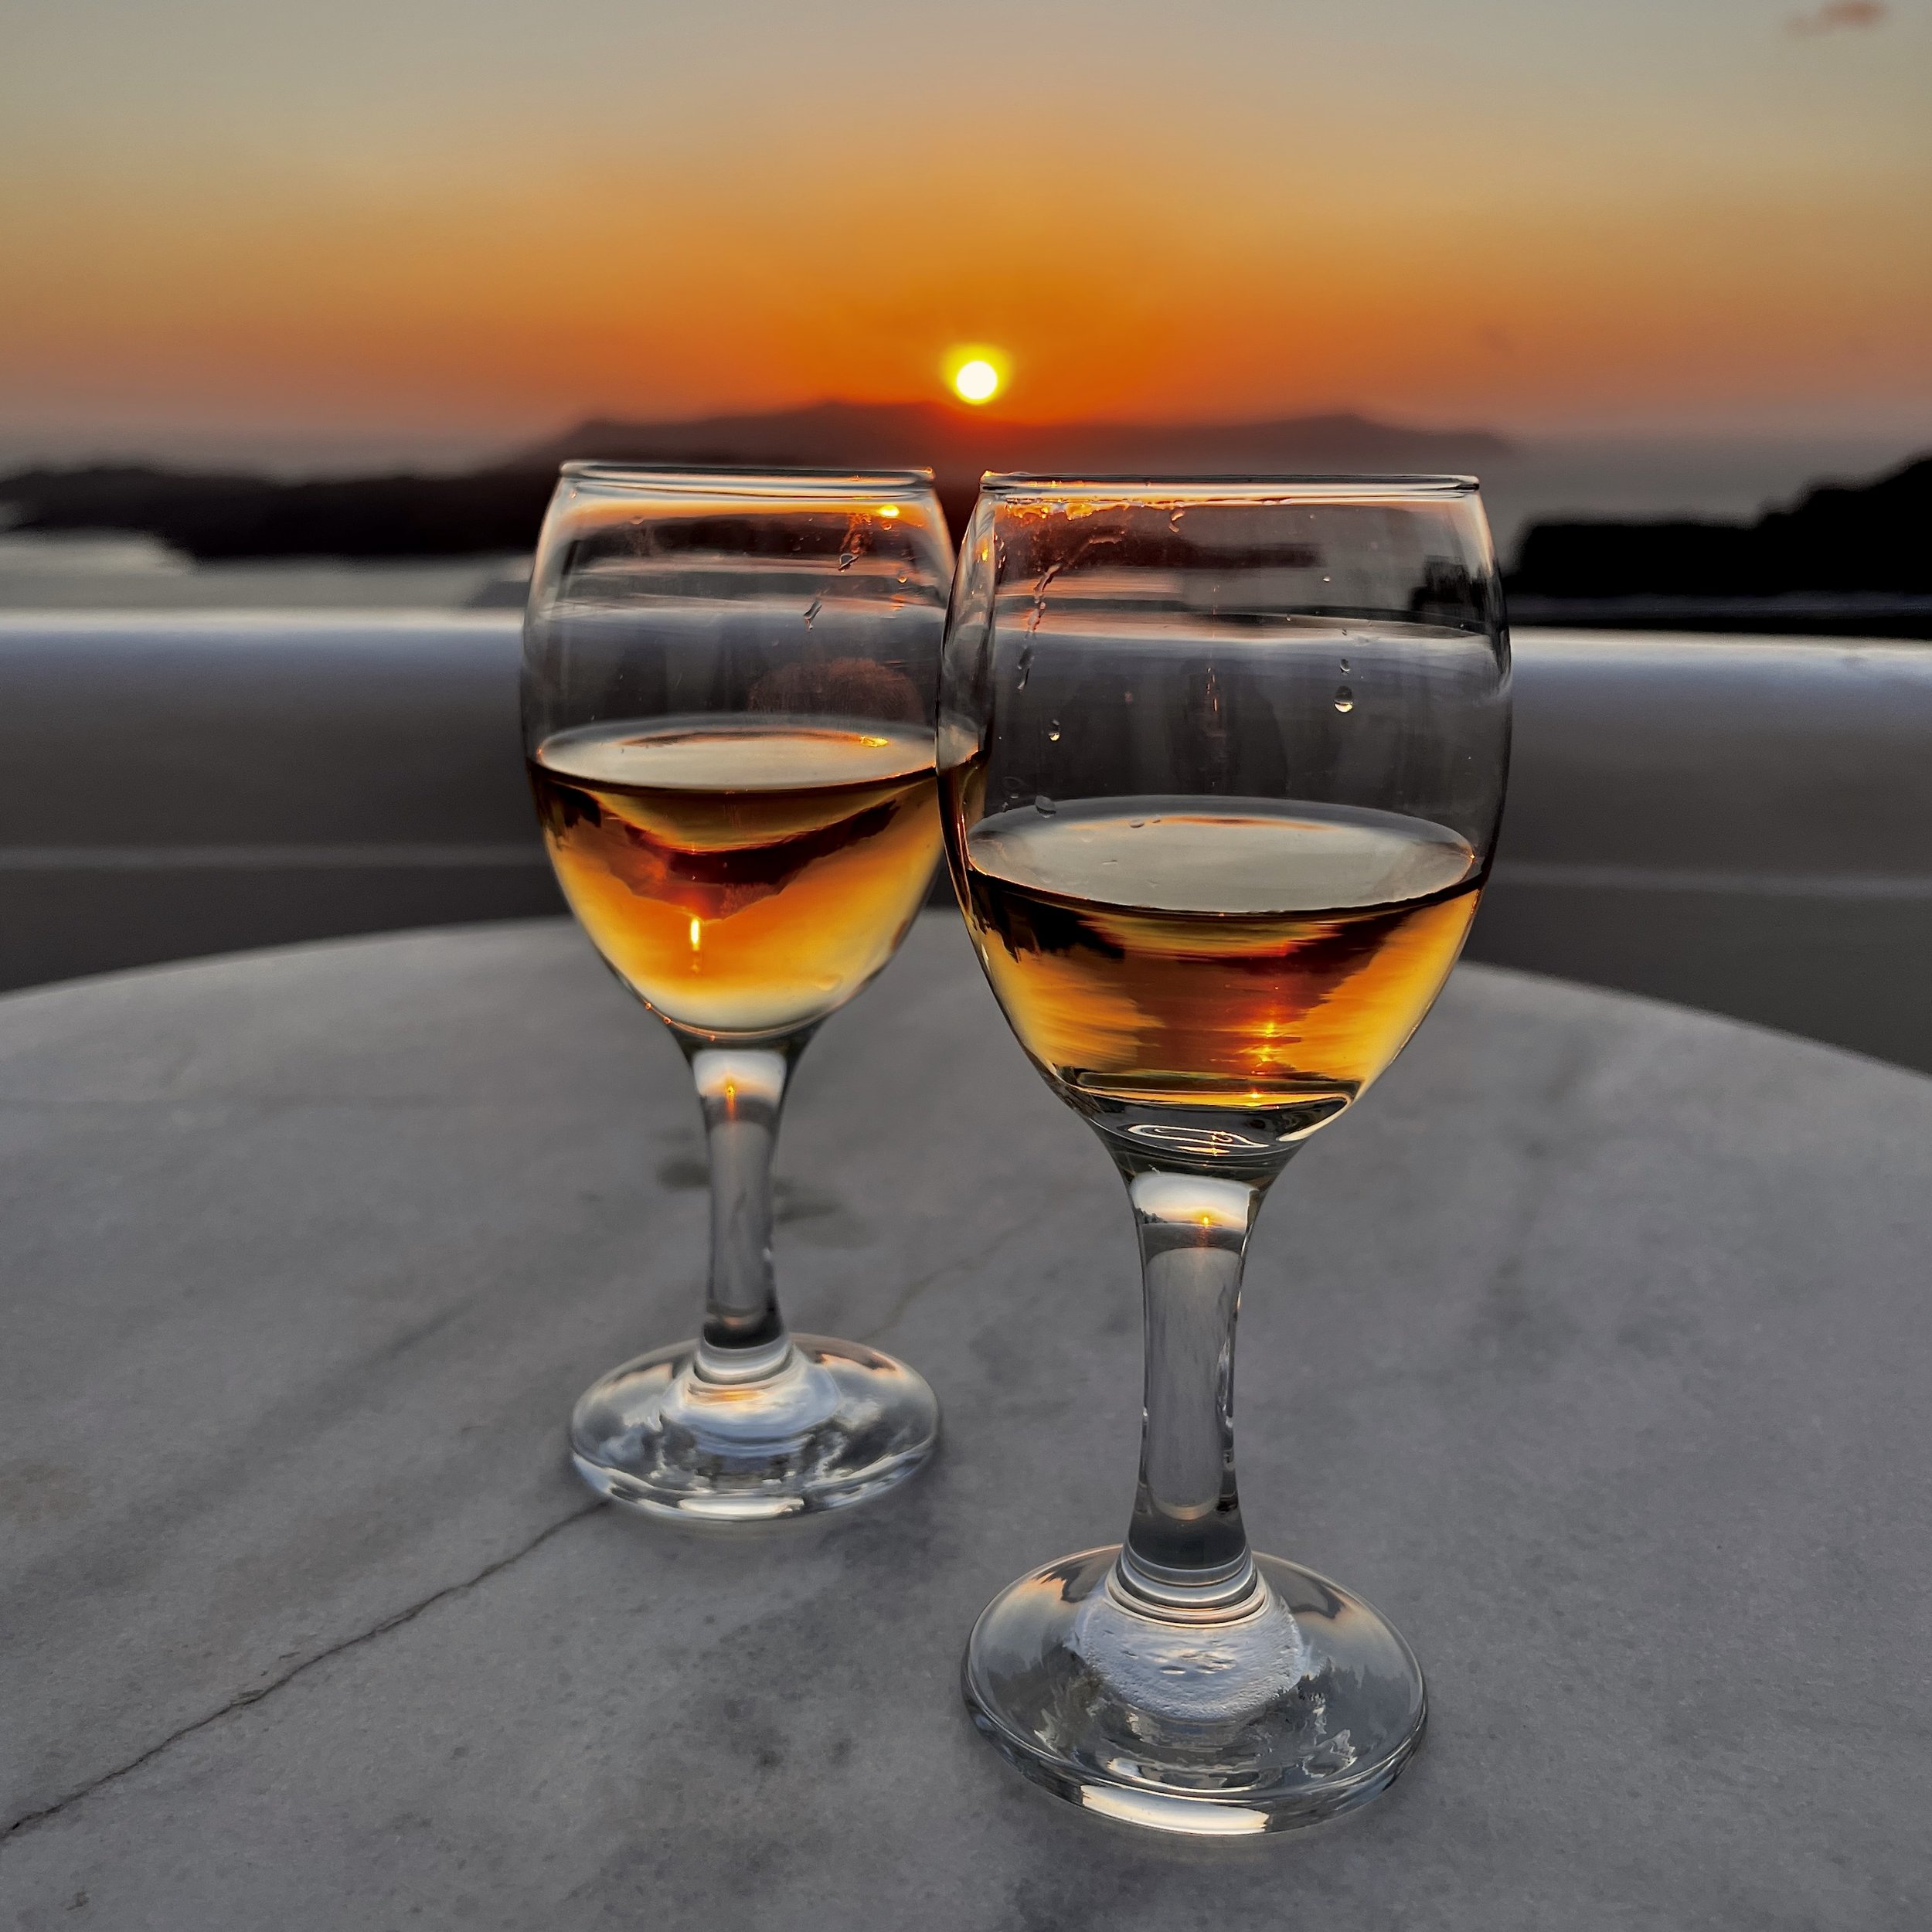 Wine Glasses w_Sunset.jpeg